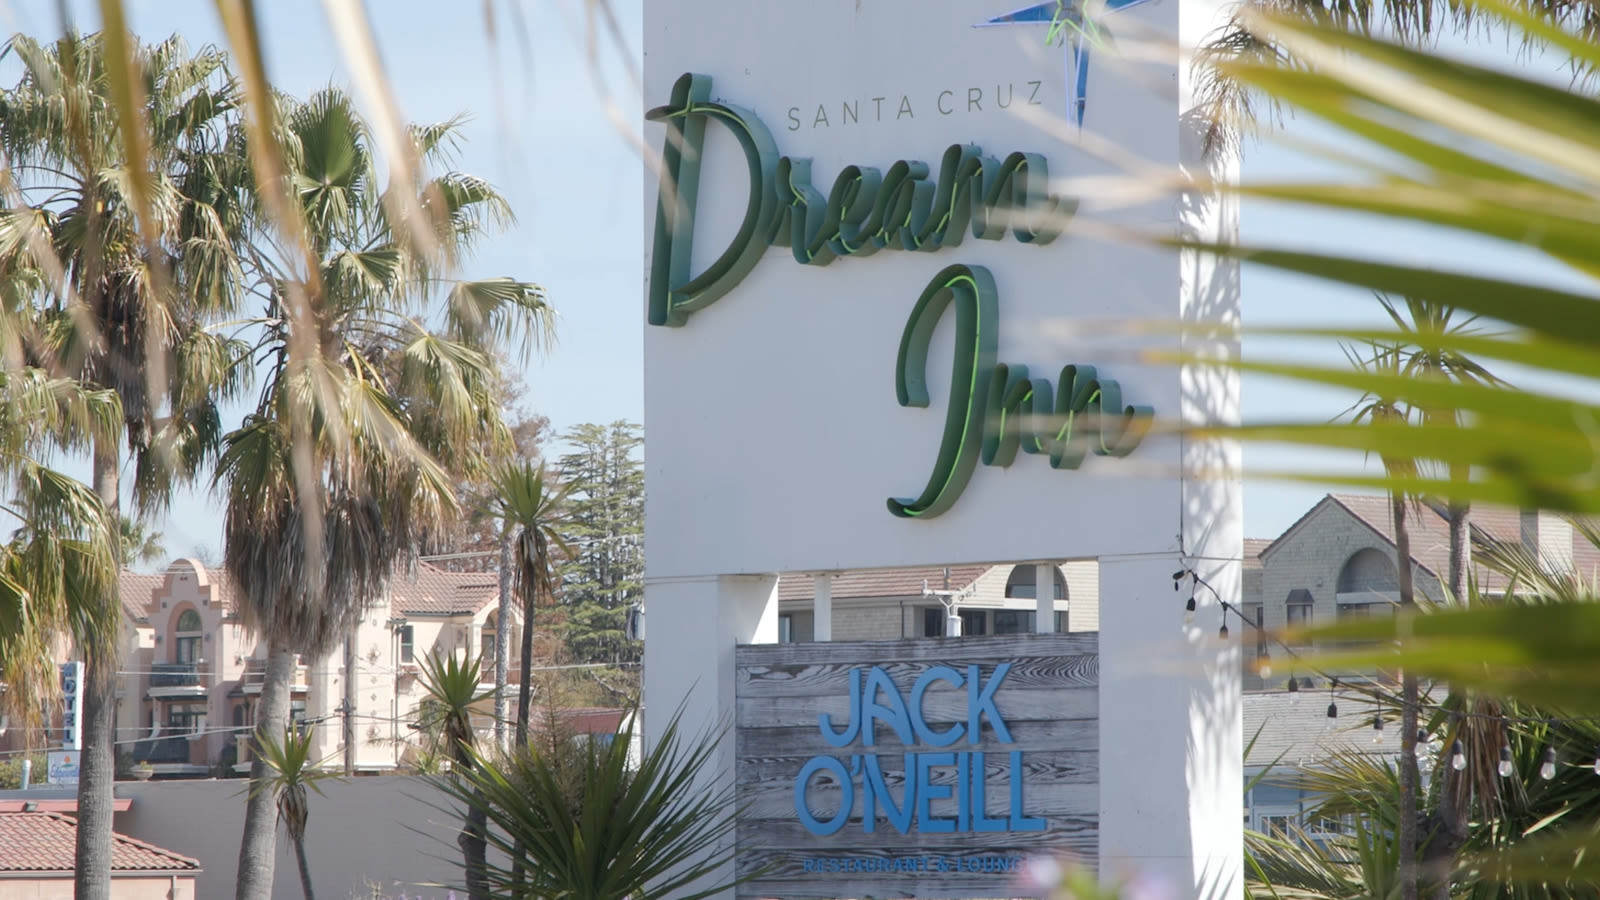 60 years of dreamin' at the Dream Inn in Santa Cruz